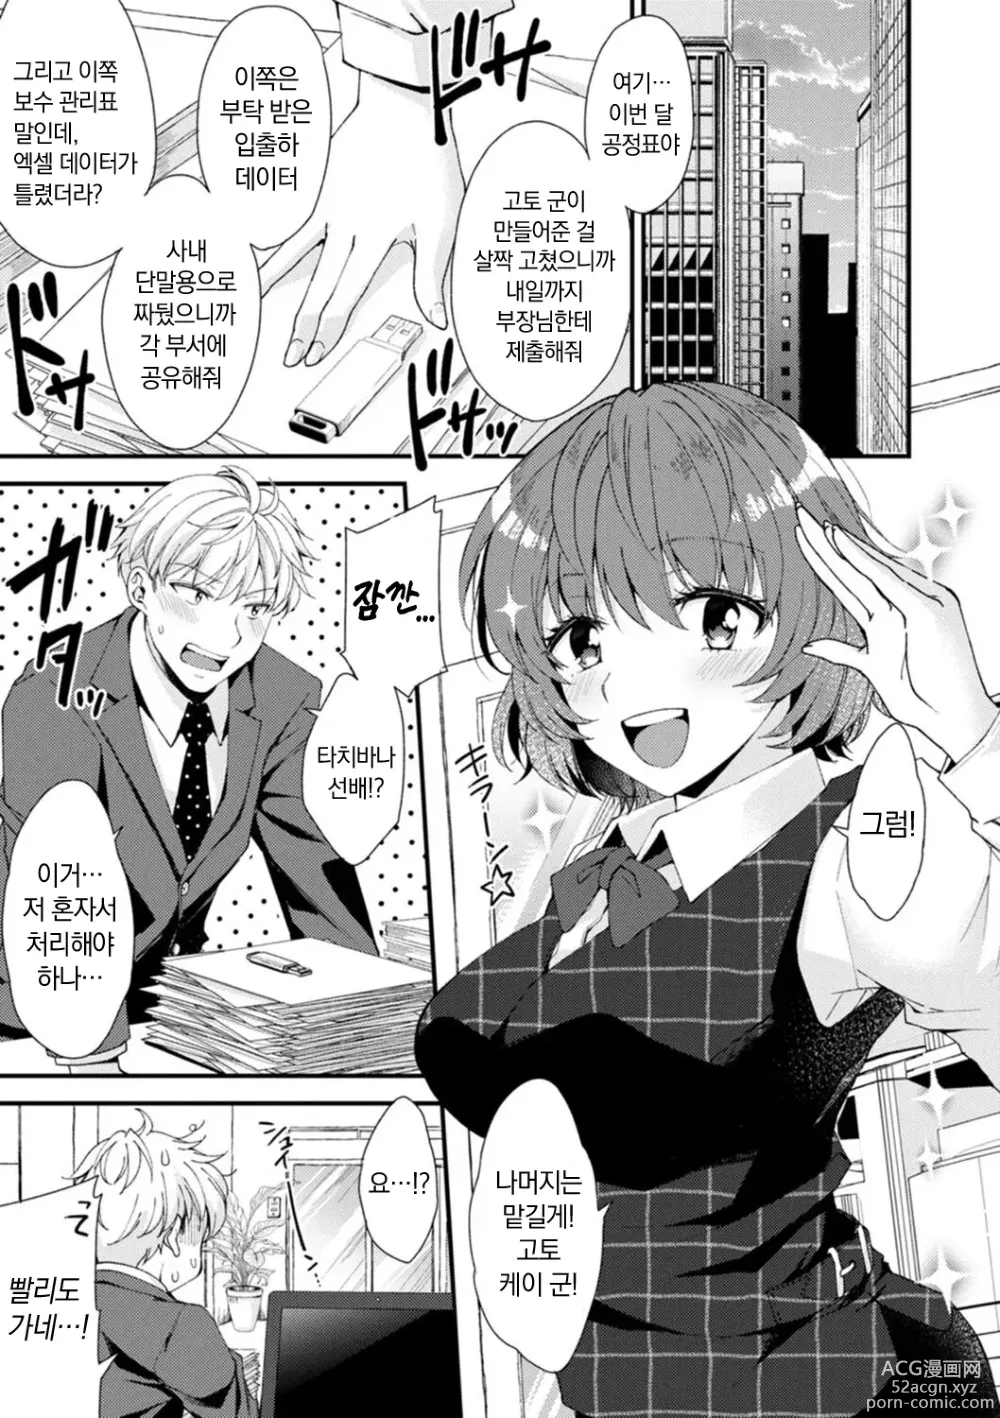 Page 5 of manga 취미가 바니걸이라니 정말이에요?